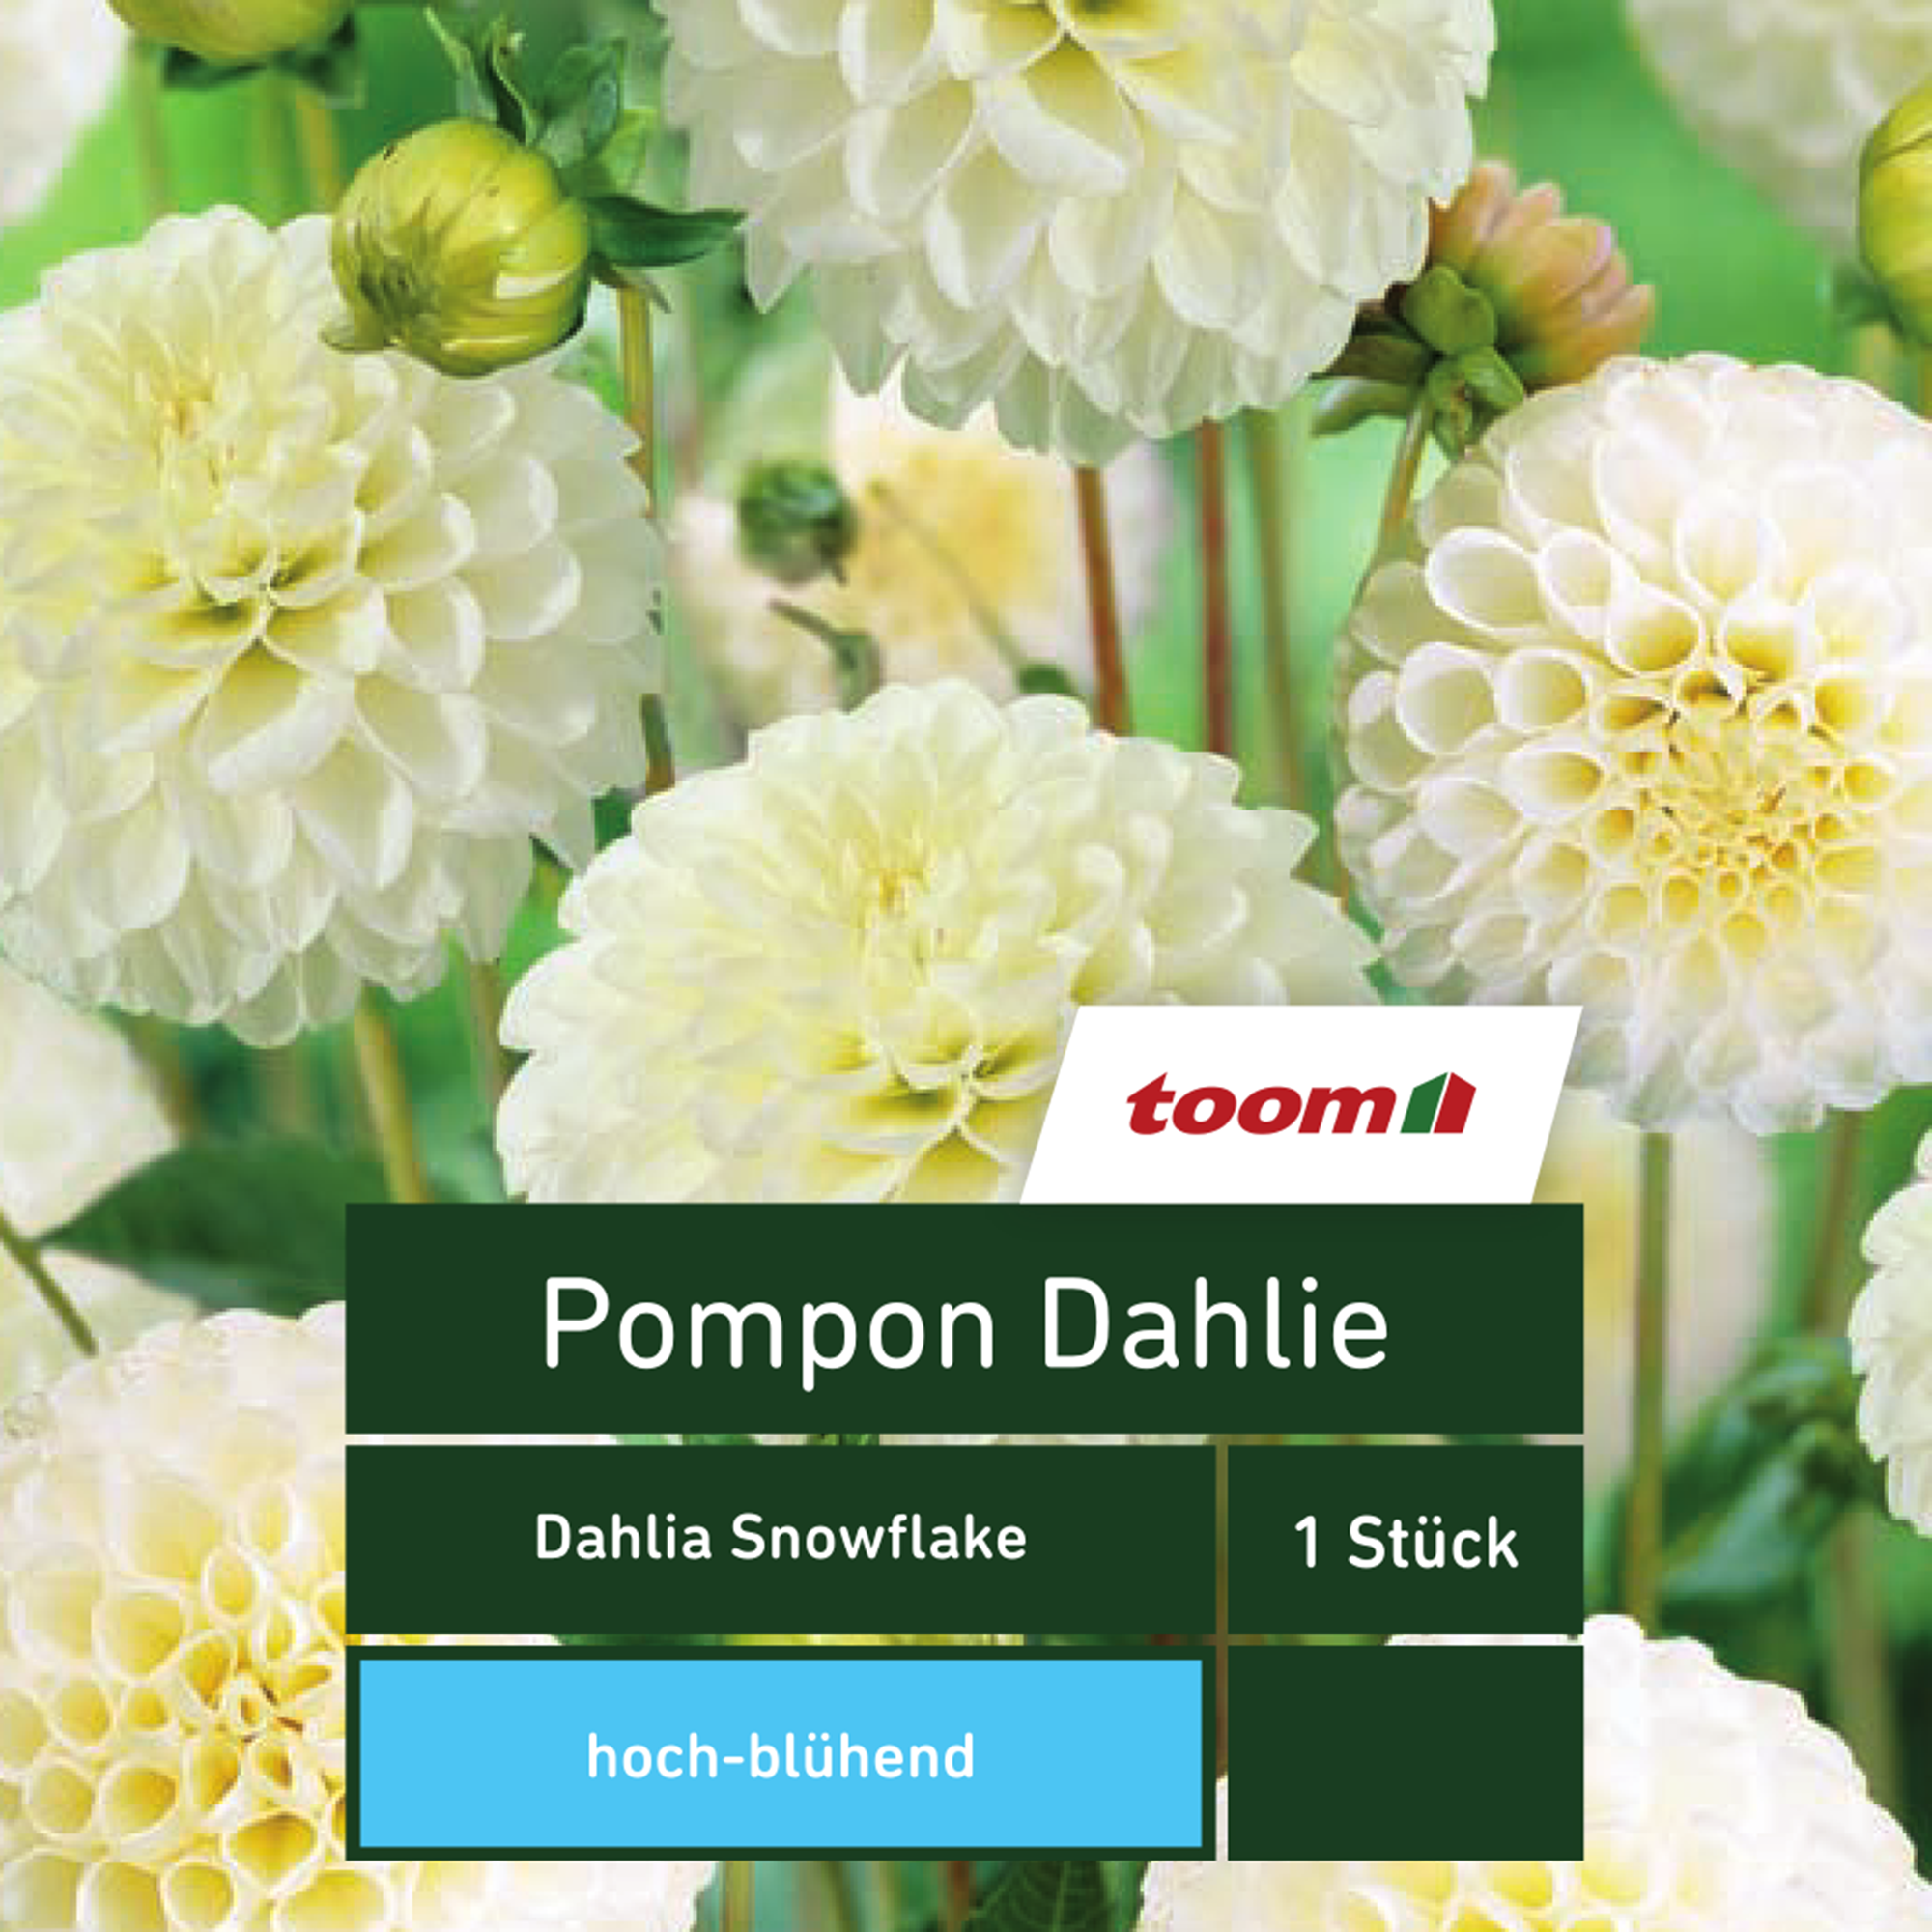 Pompon-Dahlie 'Dahlia Snowflake', 1 Stück, weiß + product picture